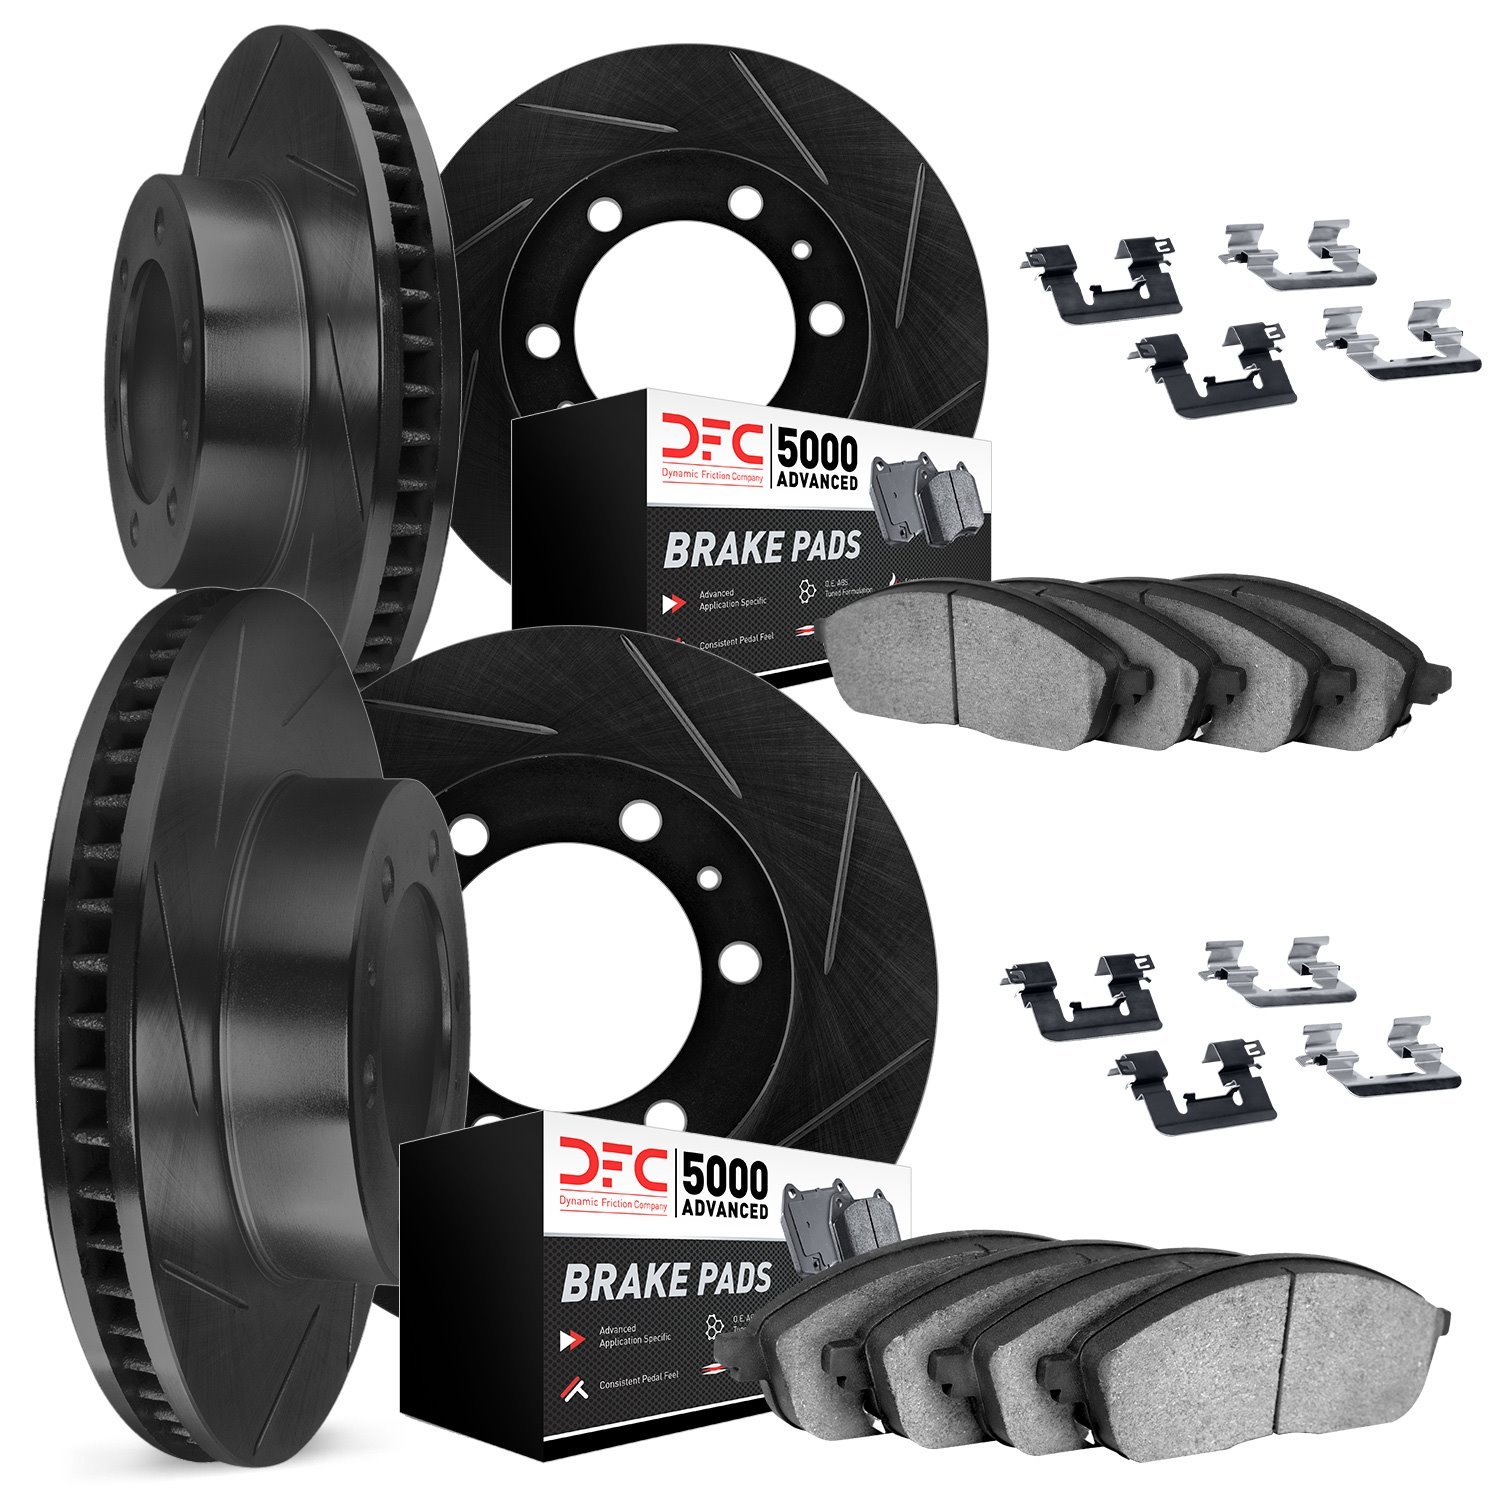 3514-67057 Slotted Brake Rotors w/5000 Advanced Brake Pads Kit & Hardware [Black], Fits Select Multiple Makes/Models, Position: